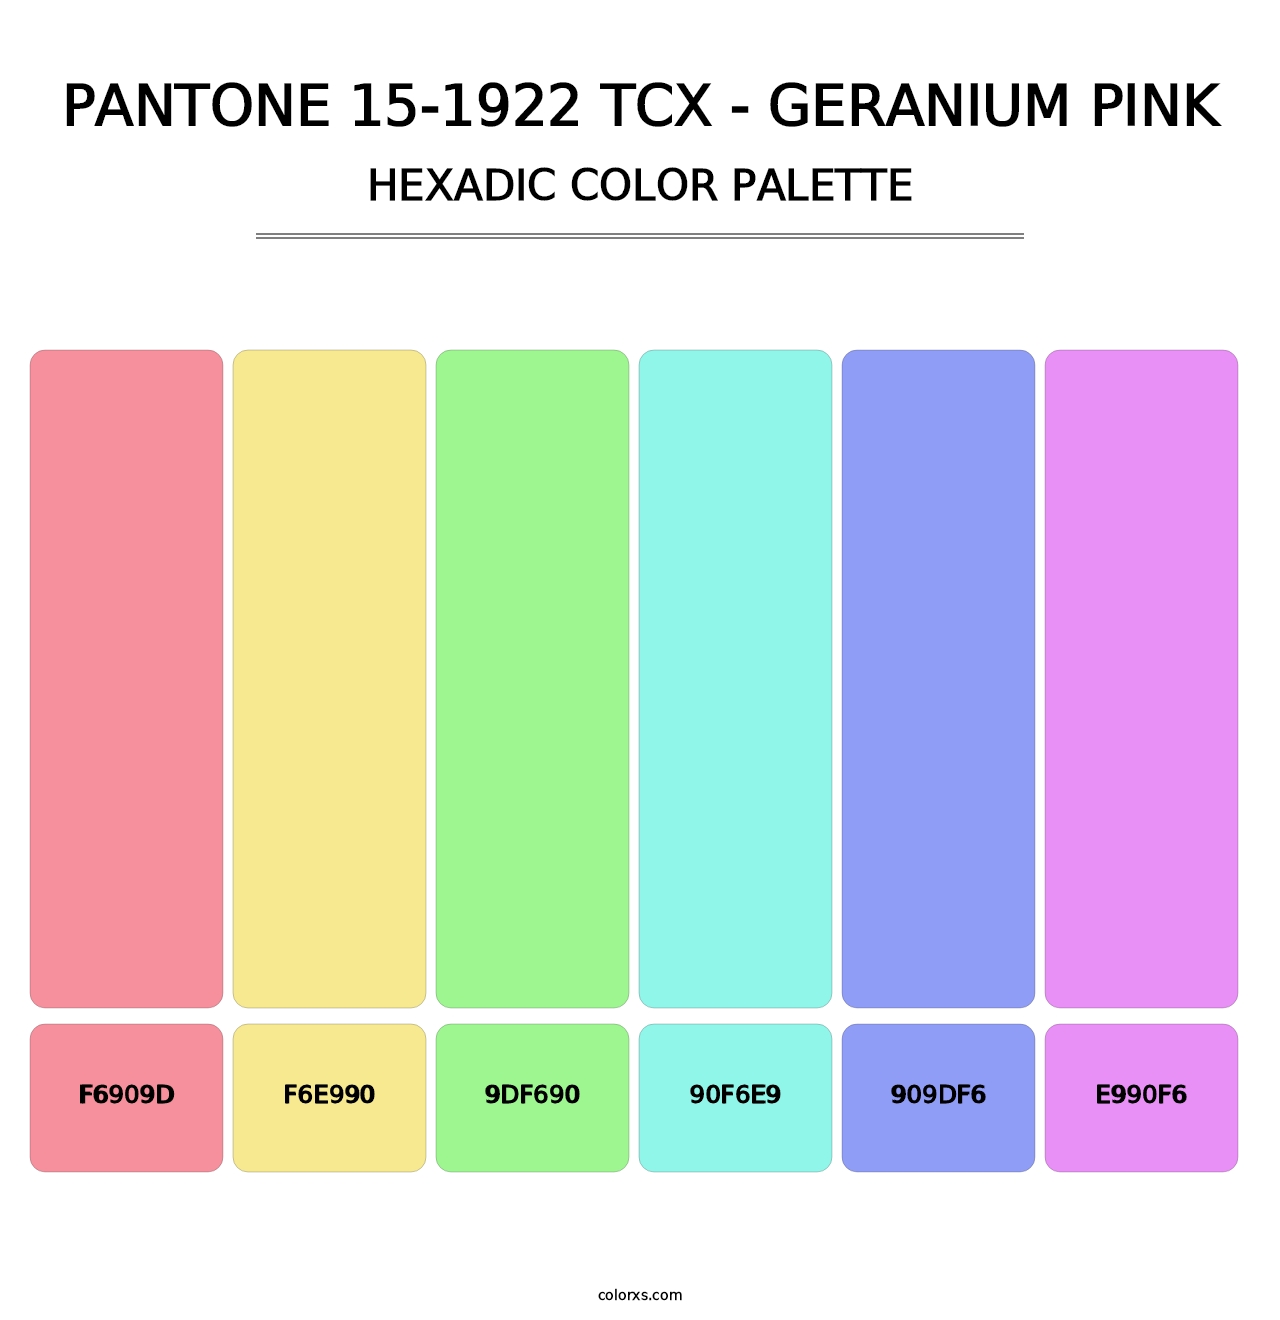 PANTONE 15-1922 TCX - Geranium Pink - Hexadic Color Palette